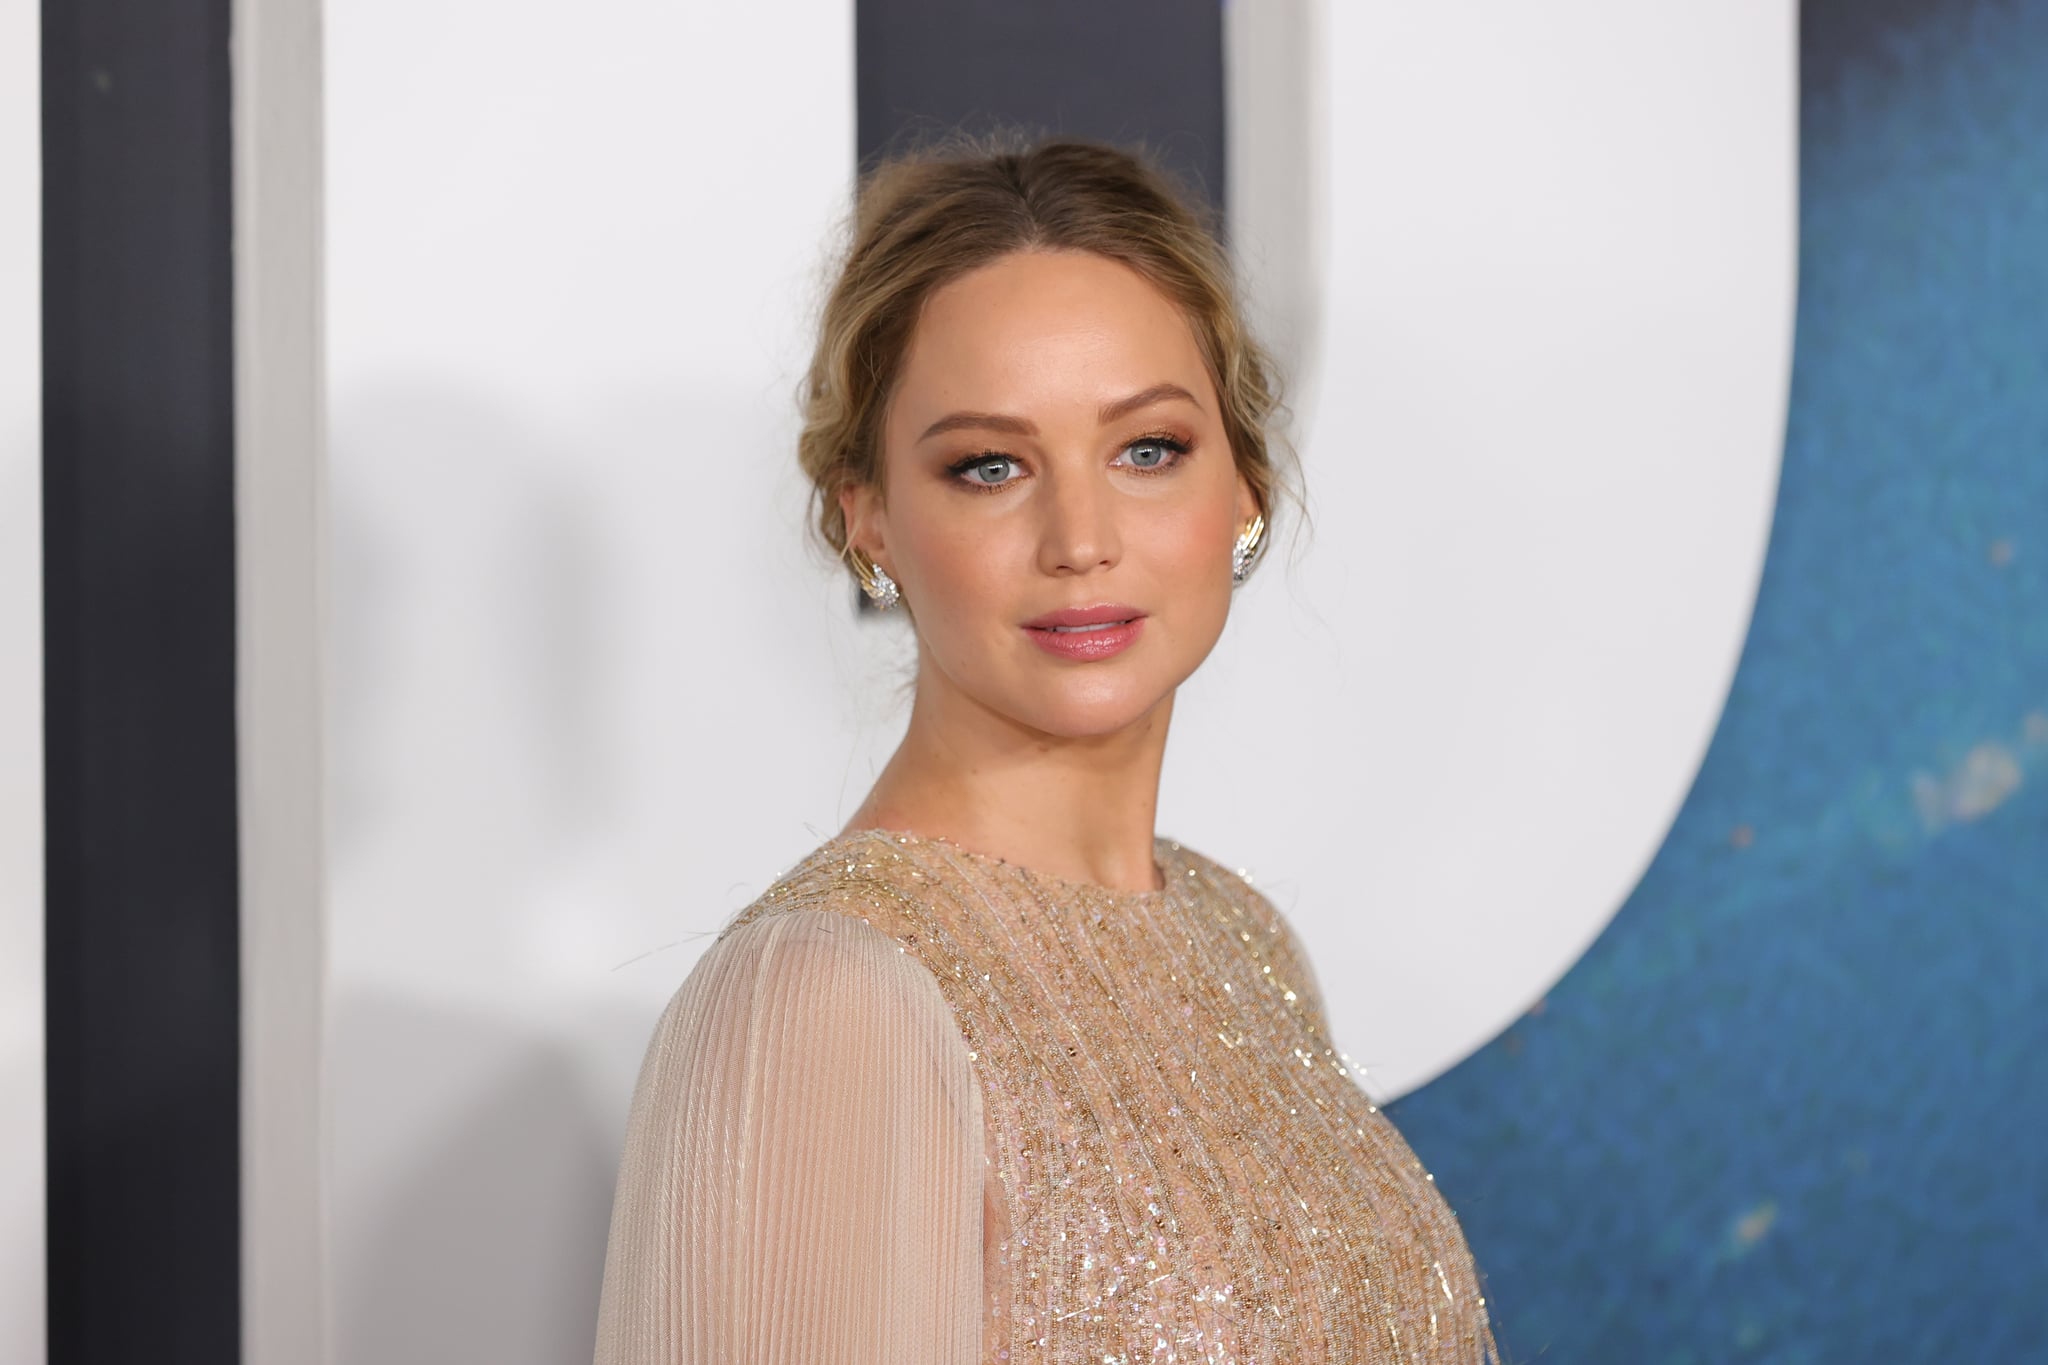 NEW YORK, NEW YORK - DECEMBER 05: Jennifer Lawrence attends the world premiere of Netflix's 